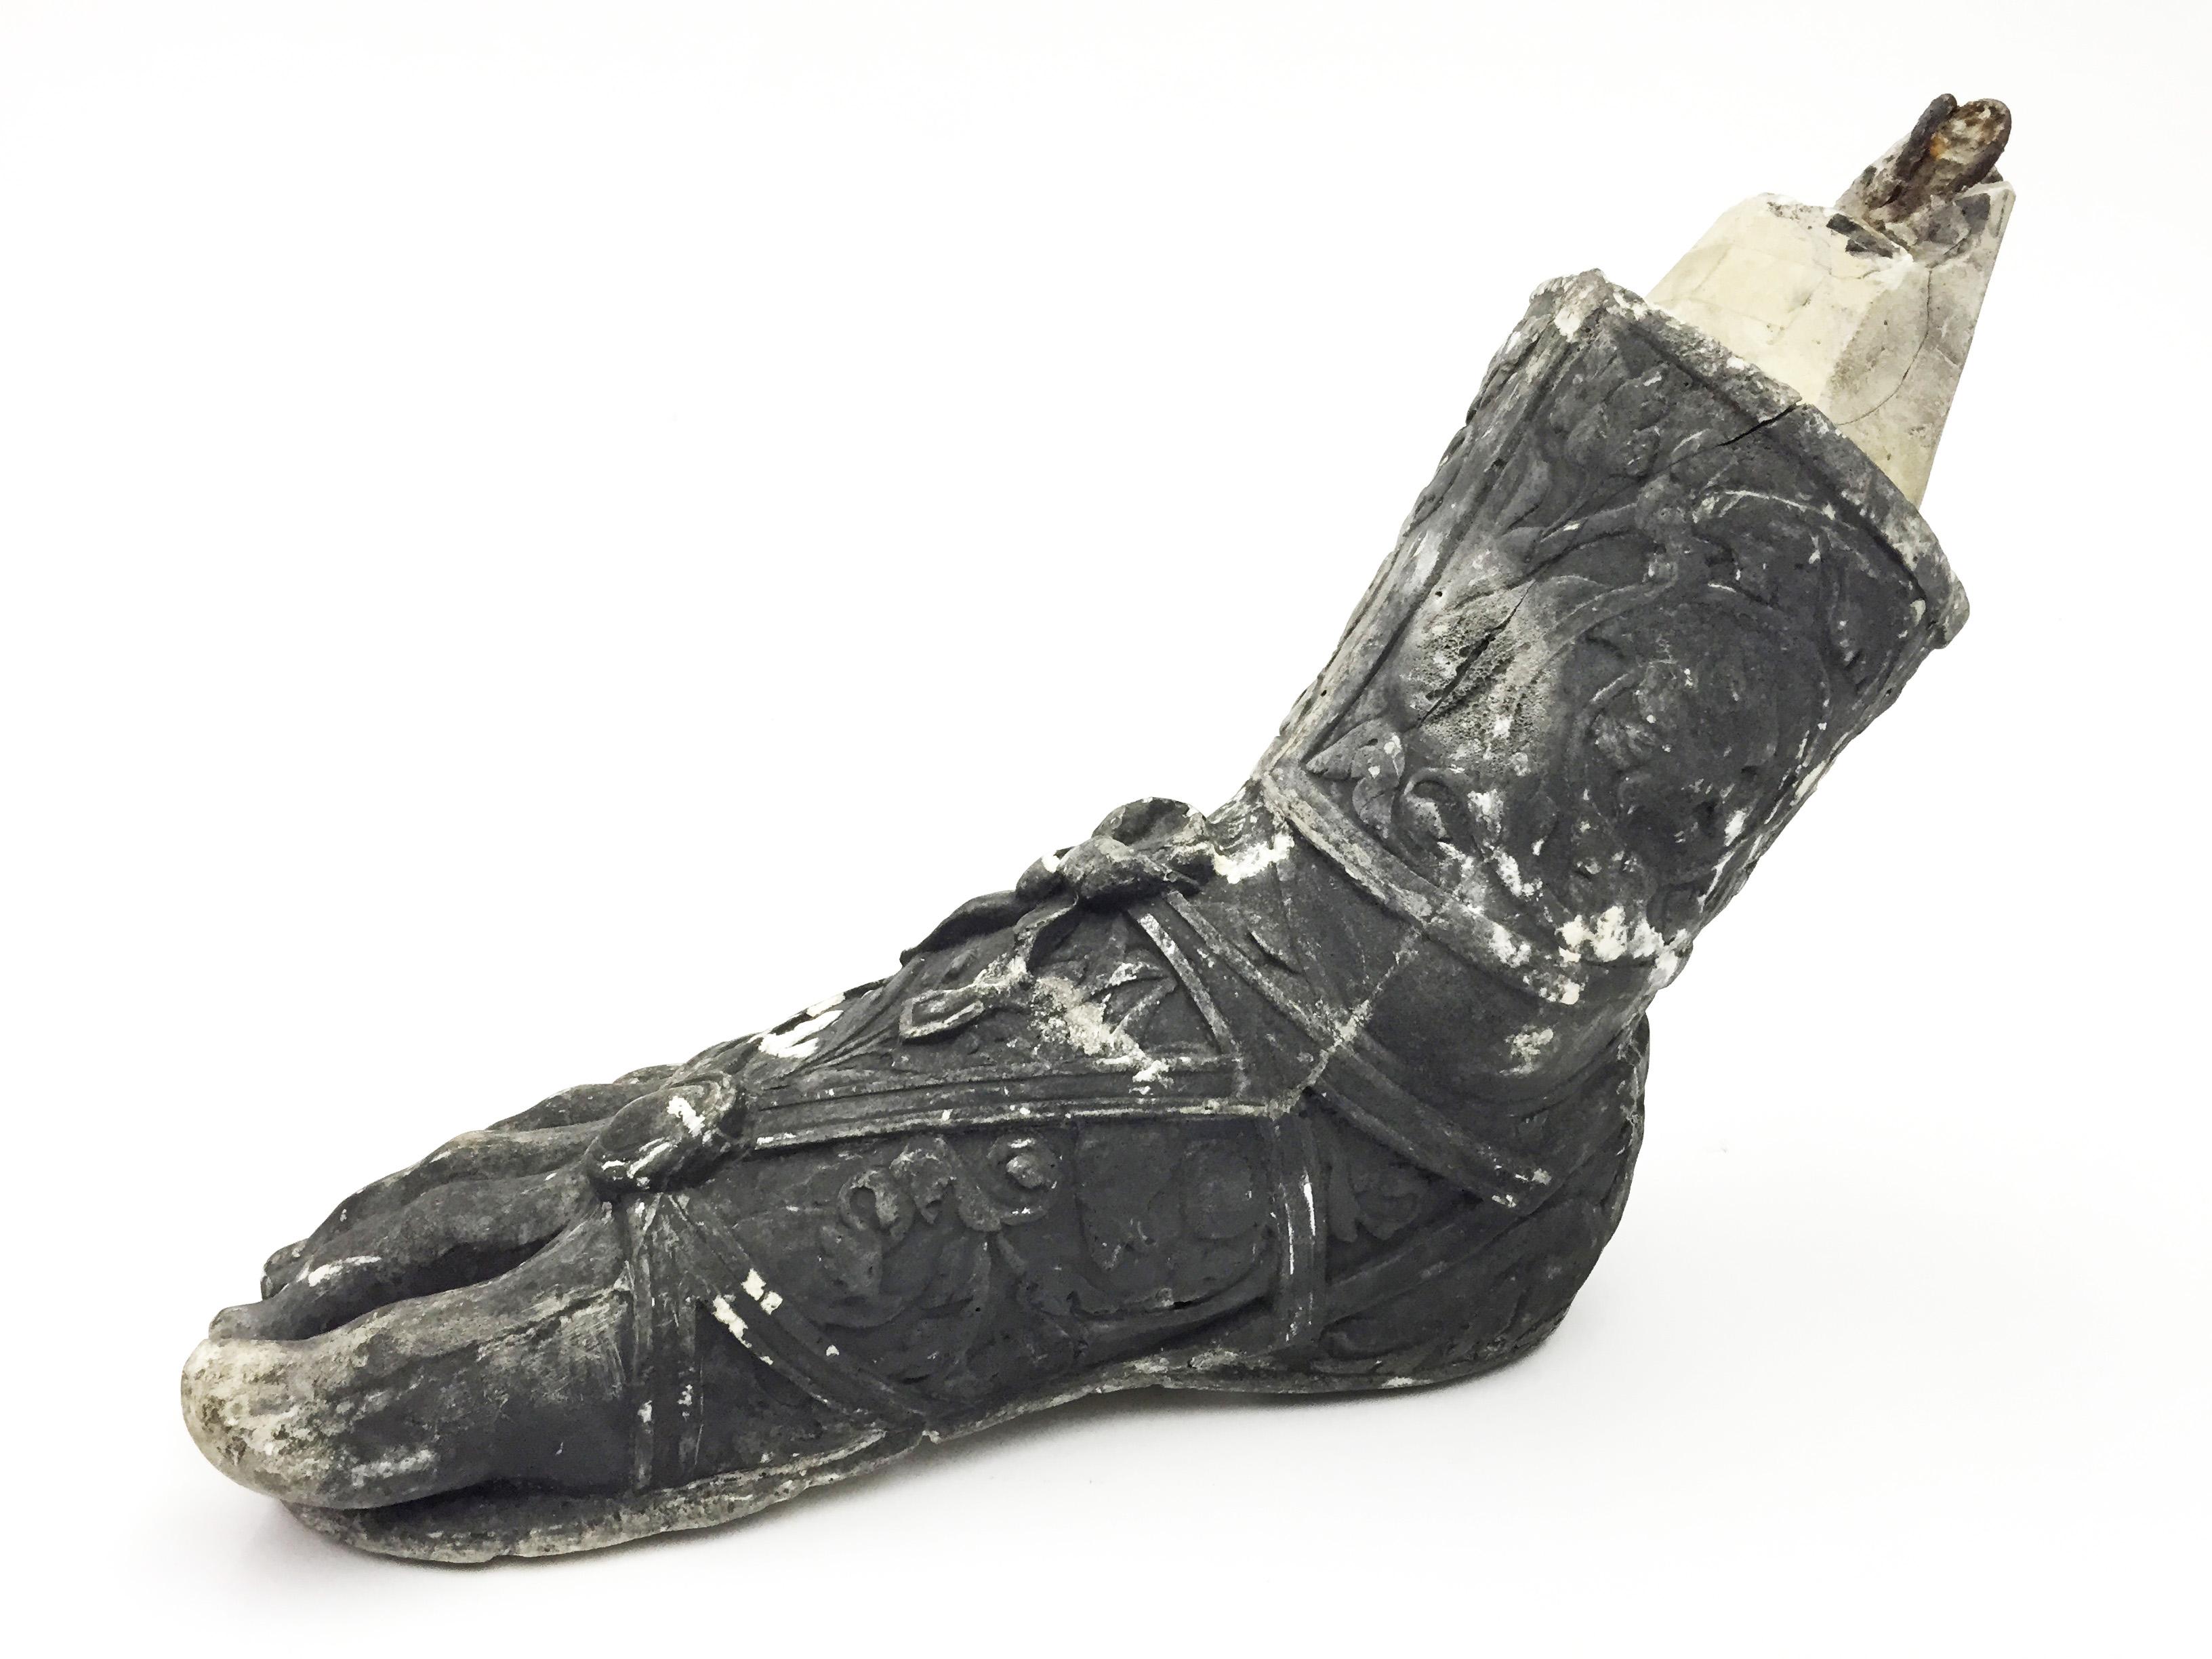 Roman Ceramic foot sculpture. Detailed sculpture of foot wearing a roman warrior like sandal. 

Property from esteemed interior designer Juan Montoya. Juan Montoya is one of the most acclaimed and prolific interior designers in the world today.